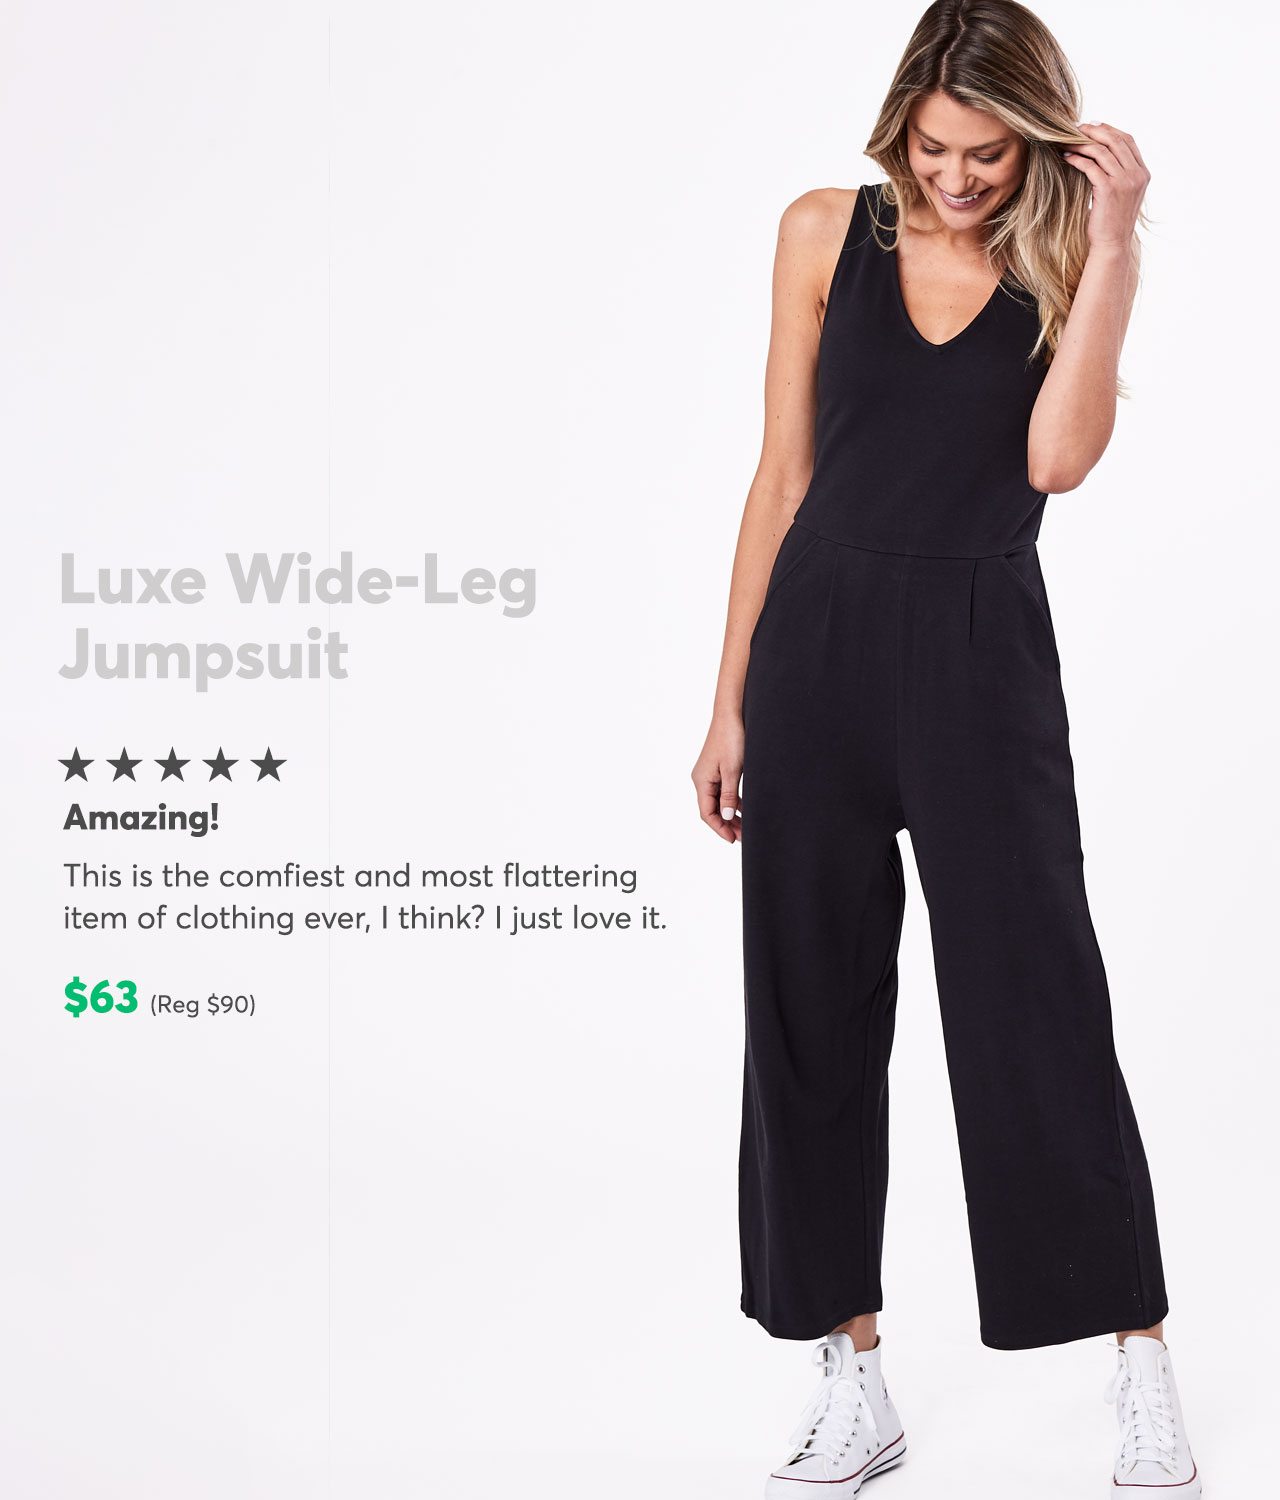 Luxe Wide-Leg Jumpsuit $63